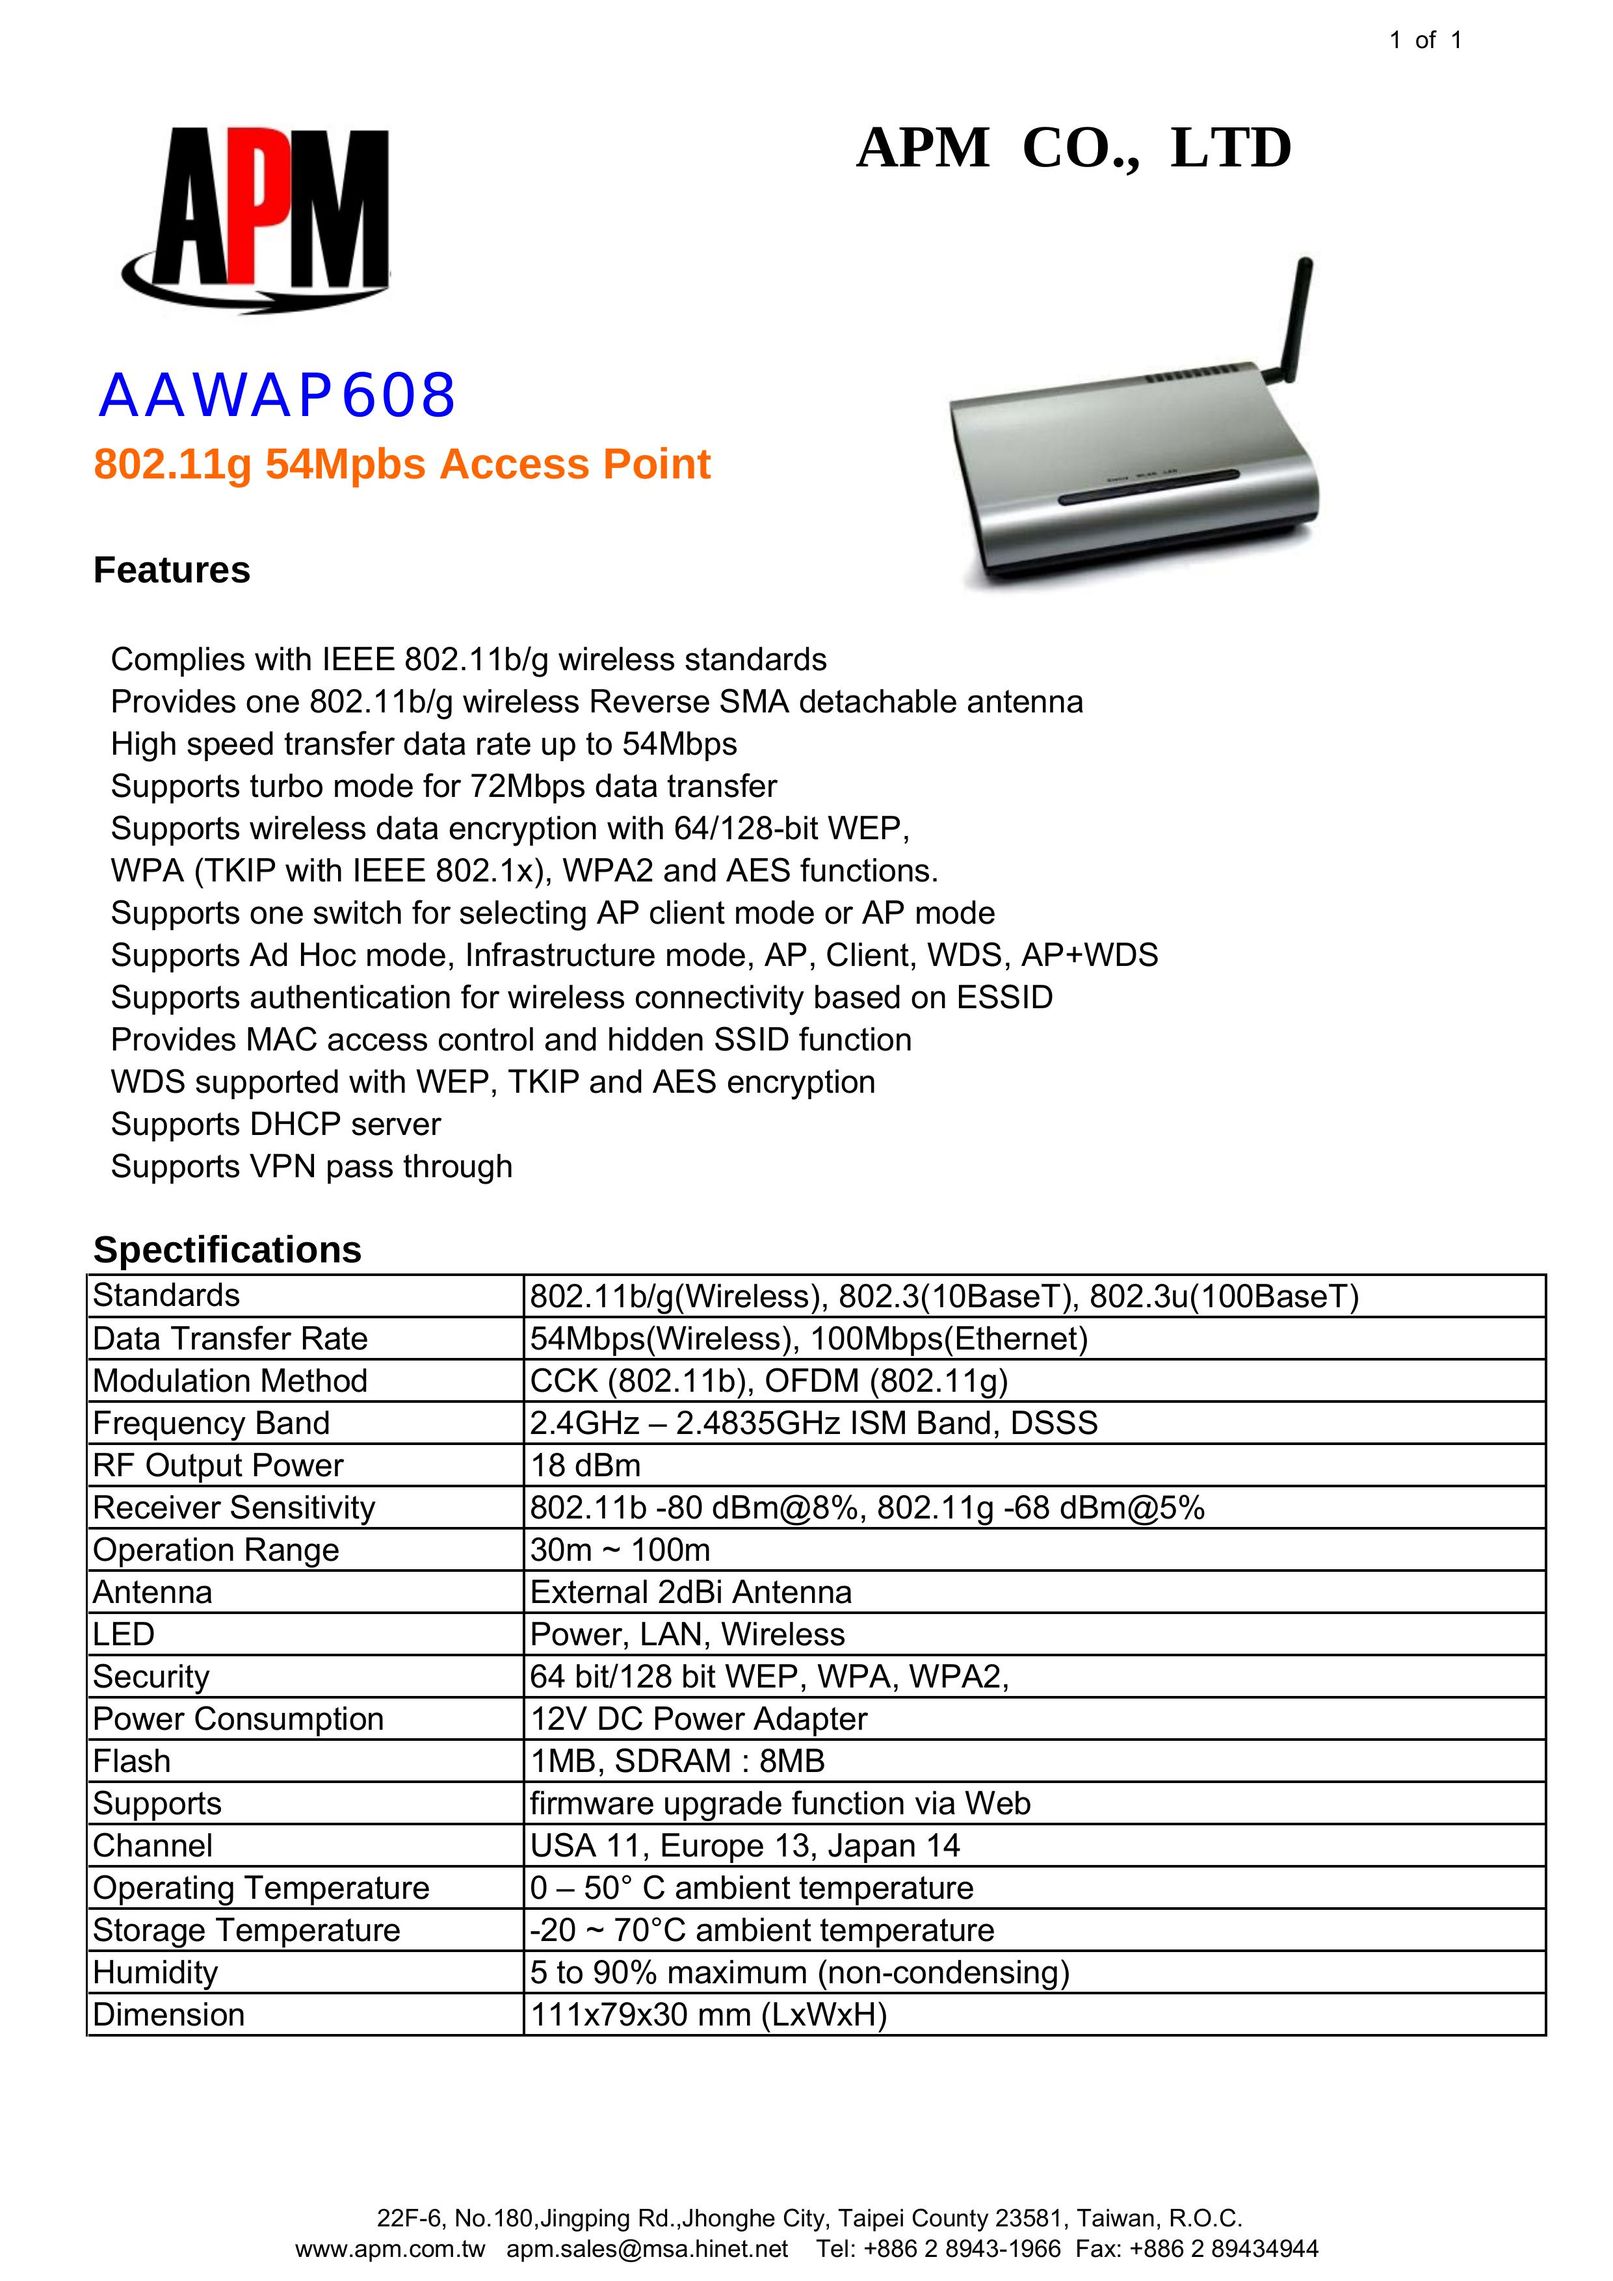 APM AAWAP608 Network Router User Manual